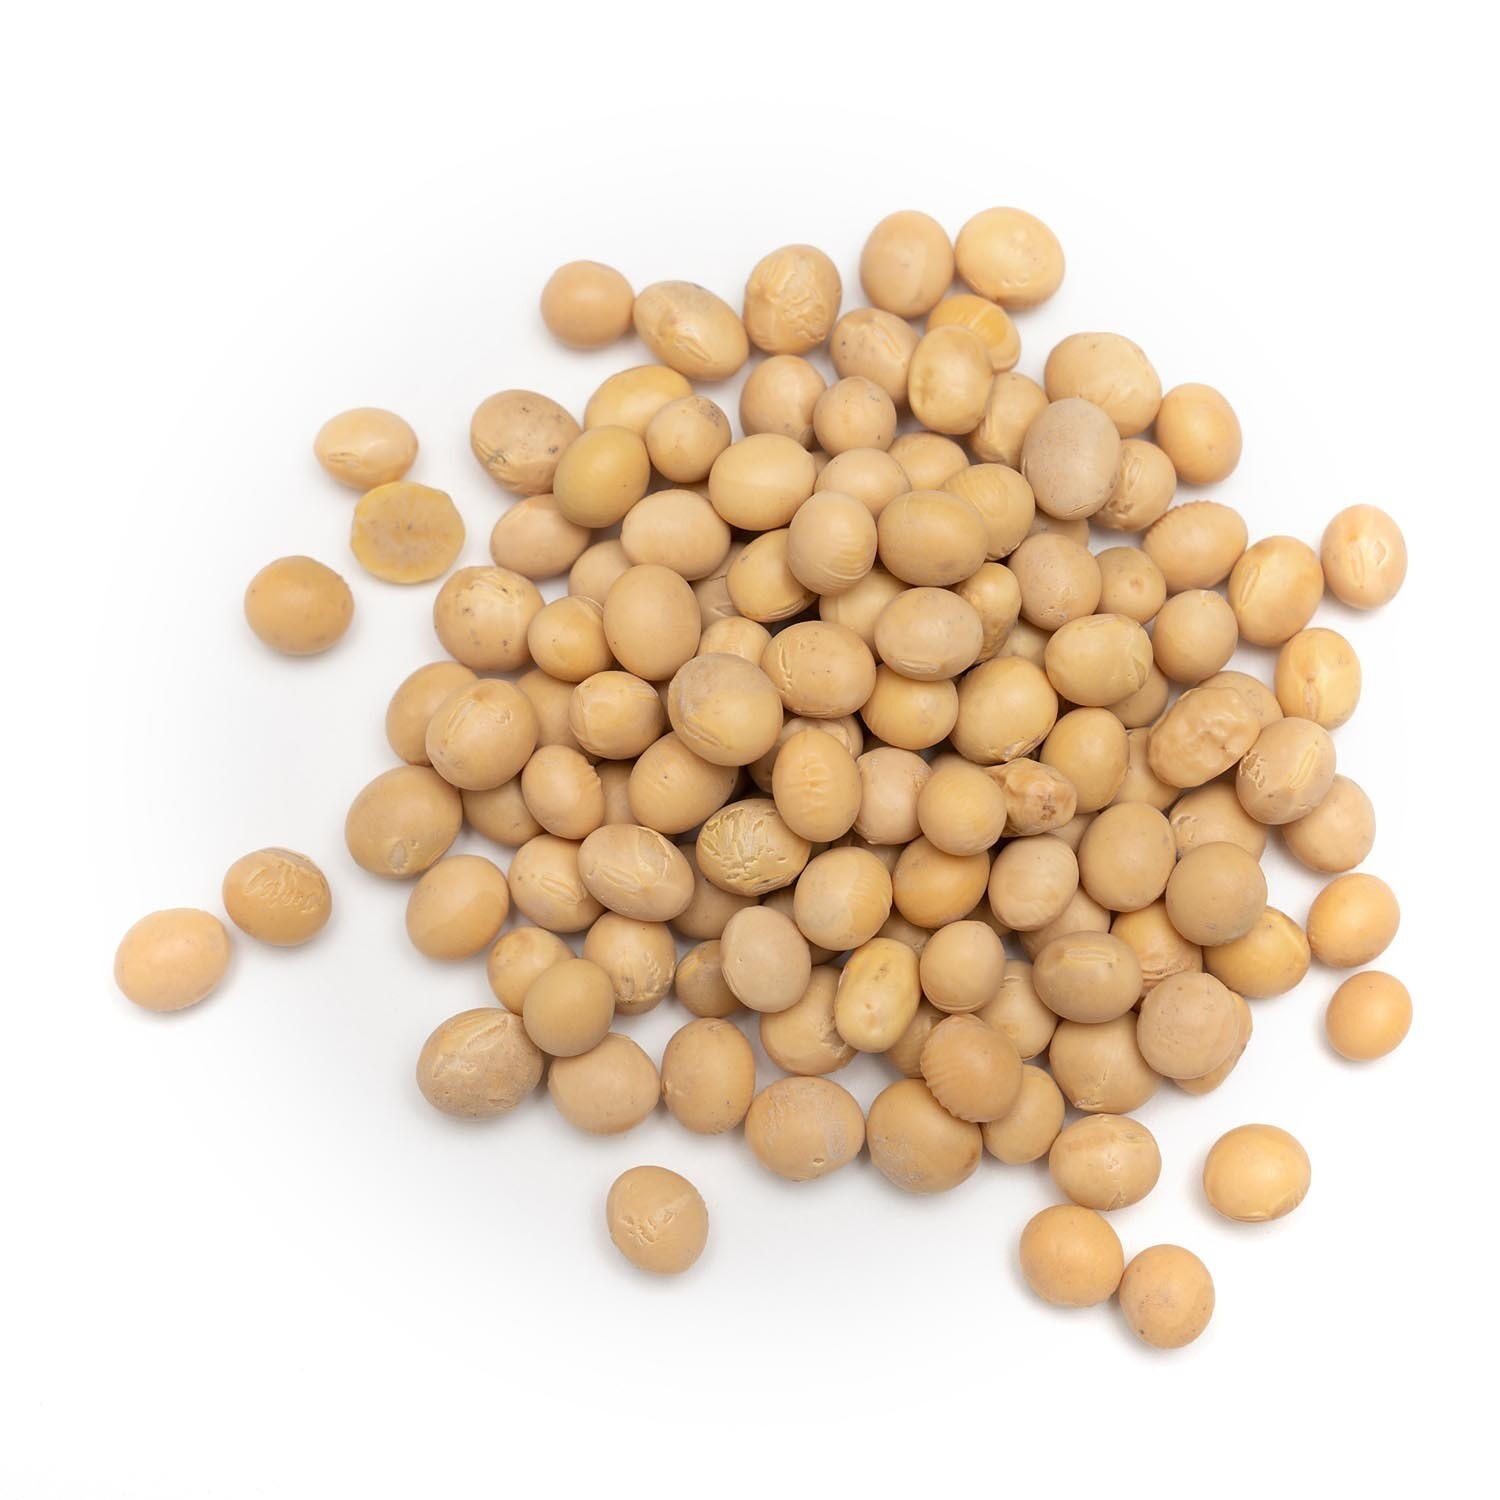 112 Soybeans Organic - 1 lb. (I2)